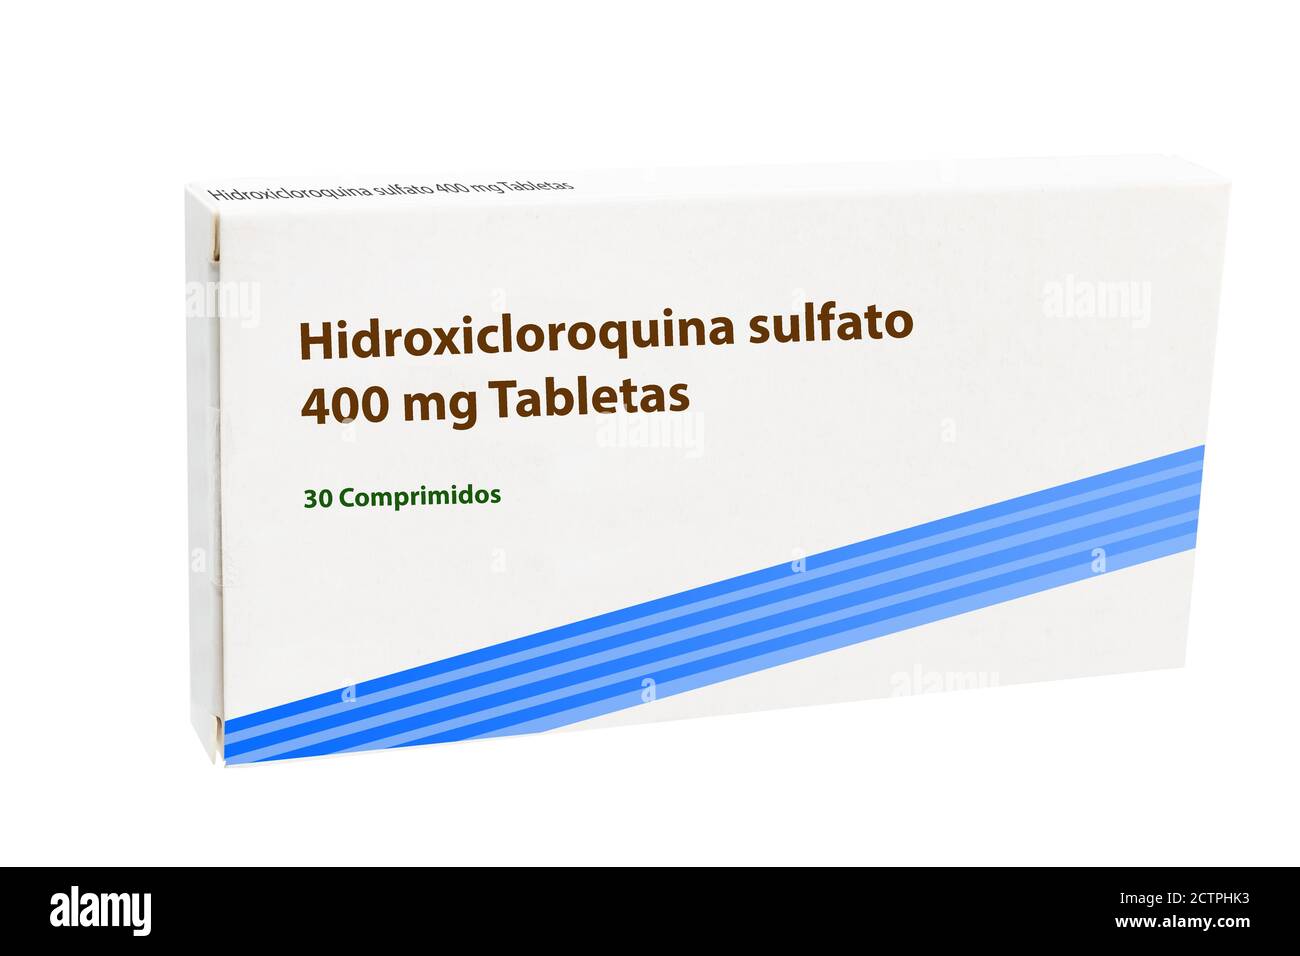 Boîte de comprimés de sulfate d'hydroxychloroquine 400 mg (rendu artistique). Texte en espagnol (Hidroxichloroquina sulfato 400 mg Tabletas) qui signifie hydroxy Banque D'Images